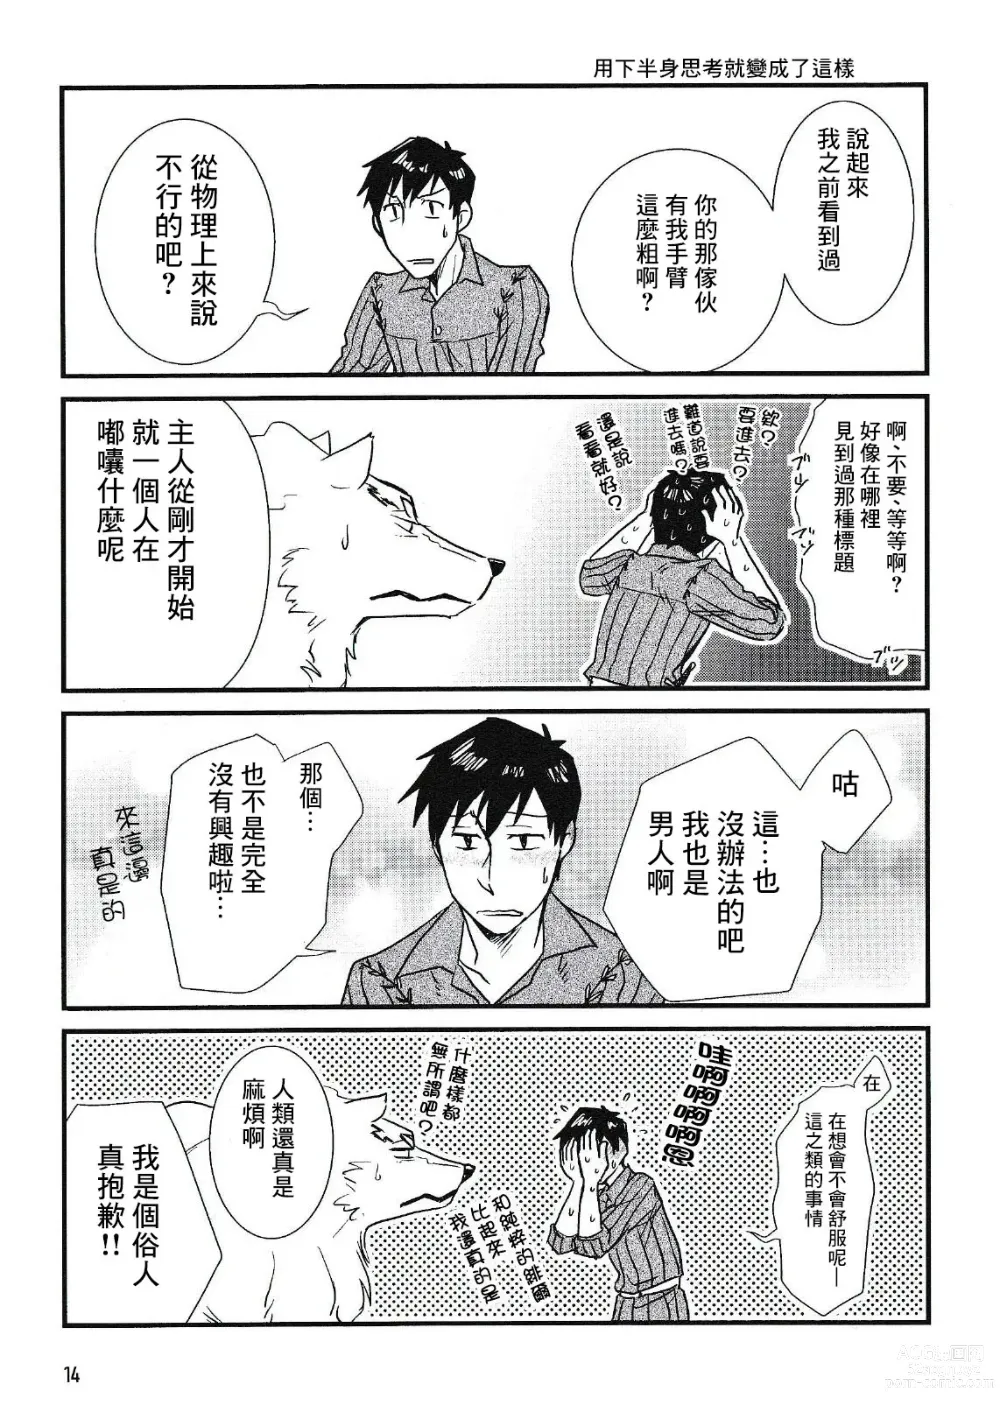 Page 14 of doujinshi NO WONDER!